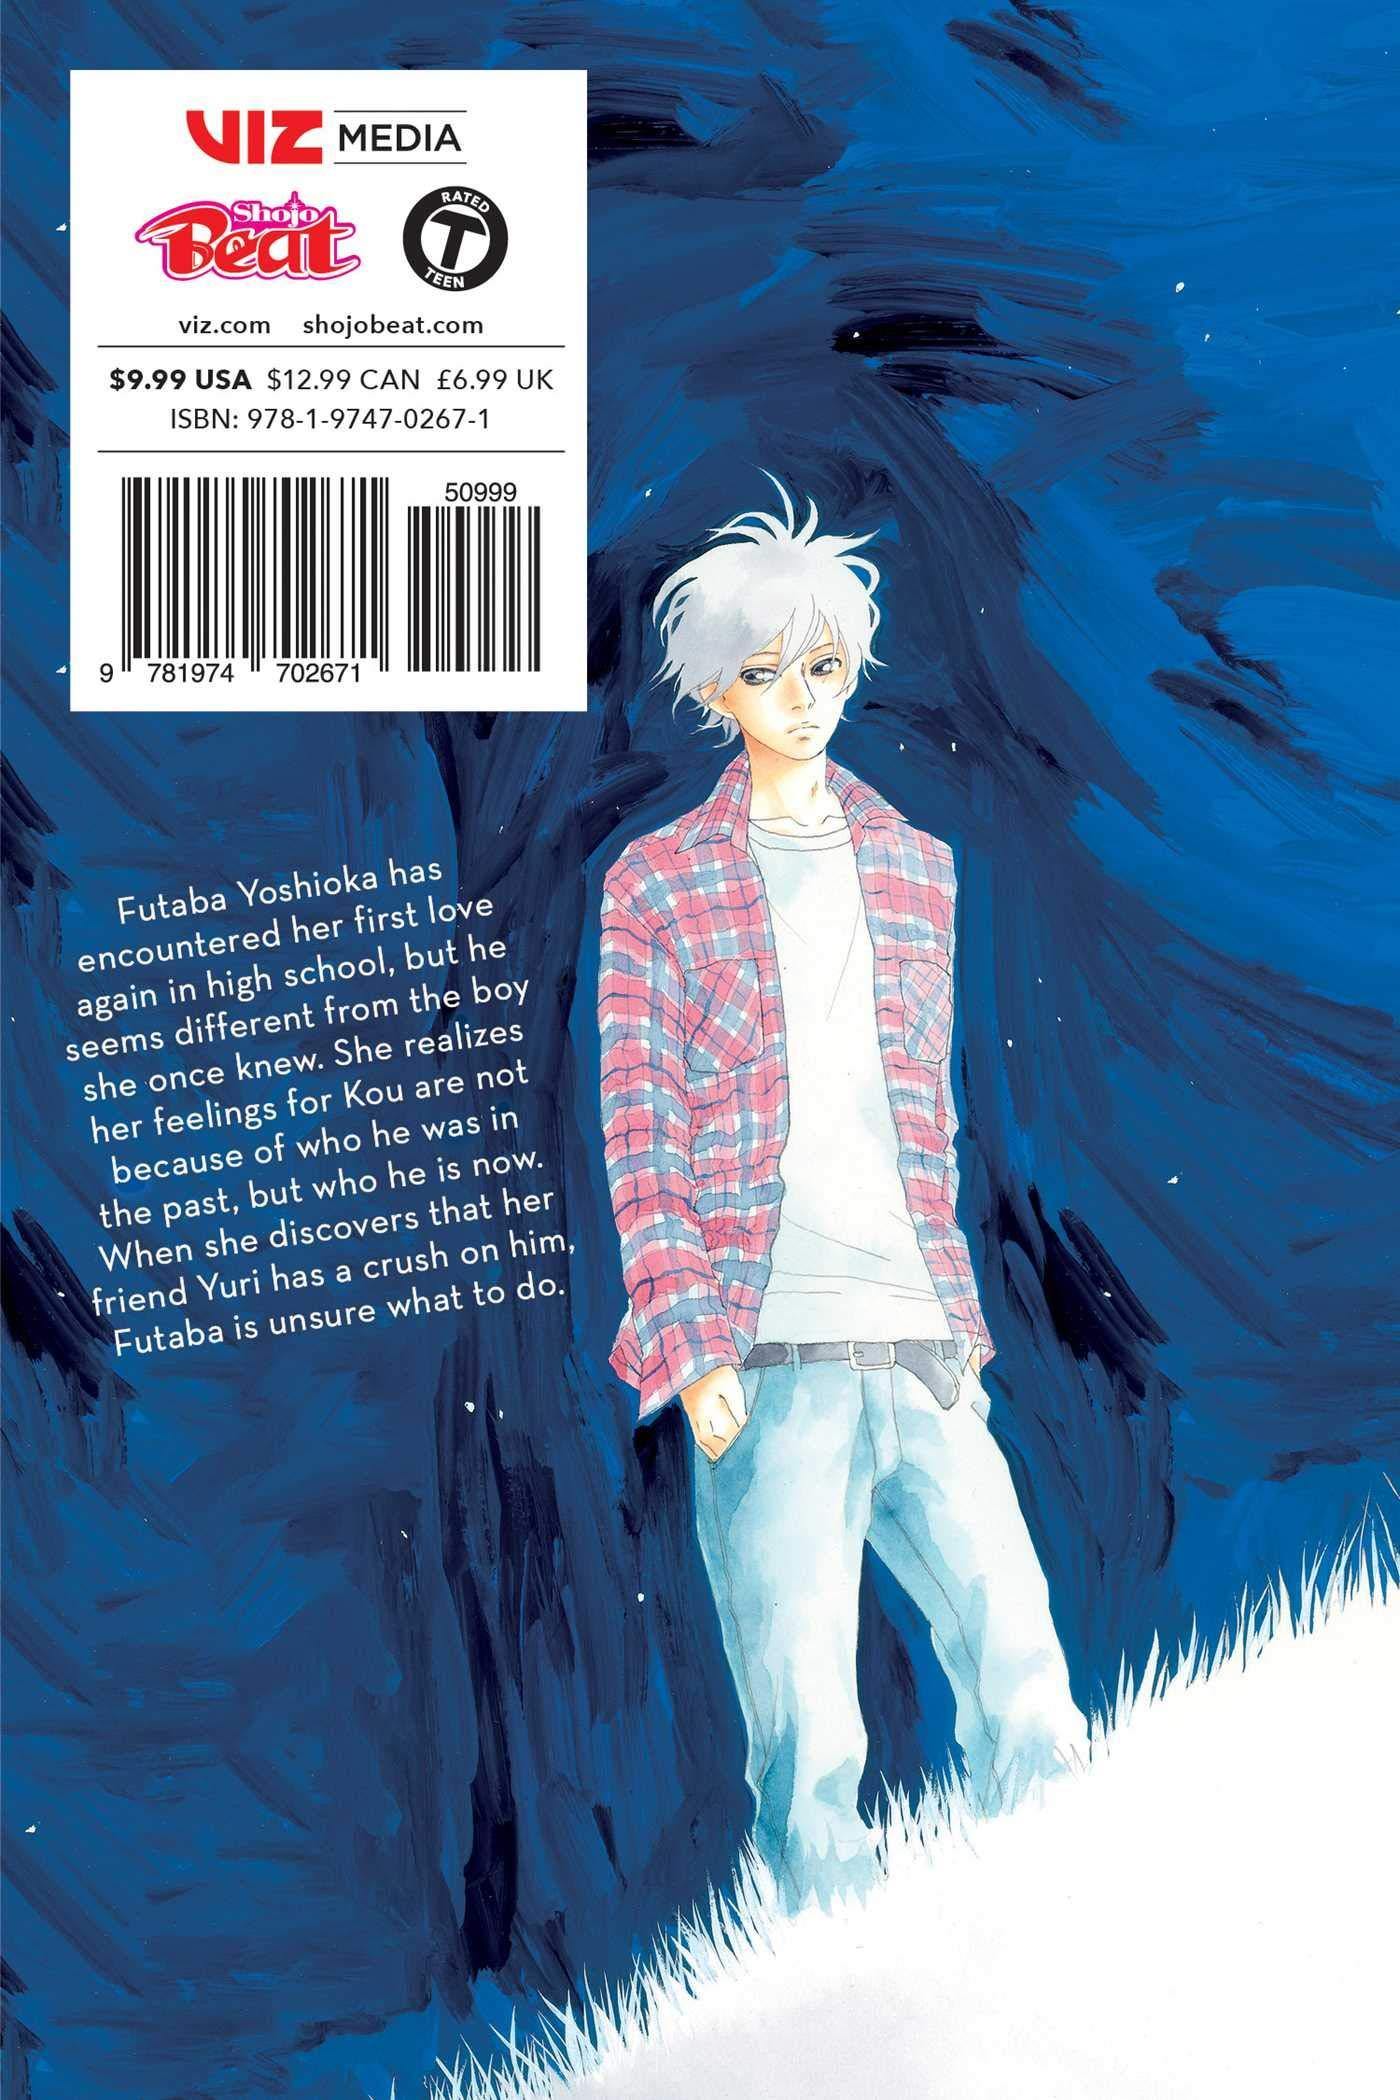 Ao Haru Ride, Vol. 3 - Booksondemand